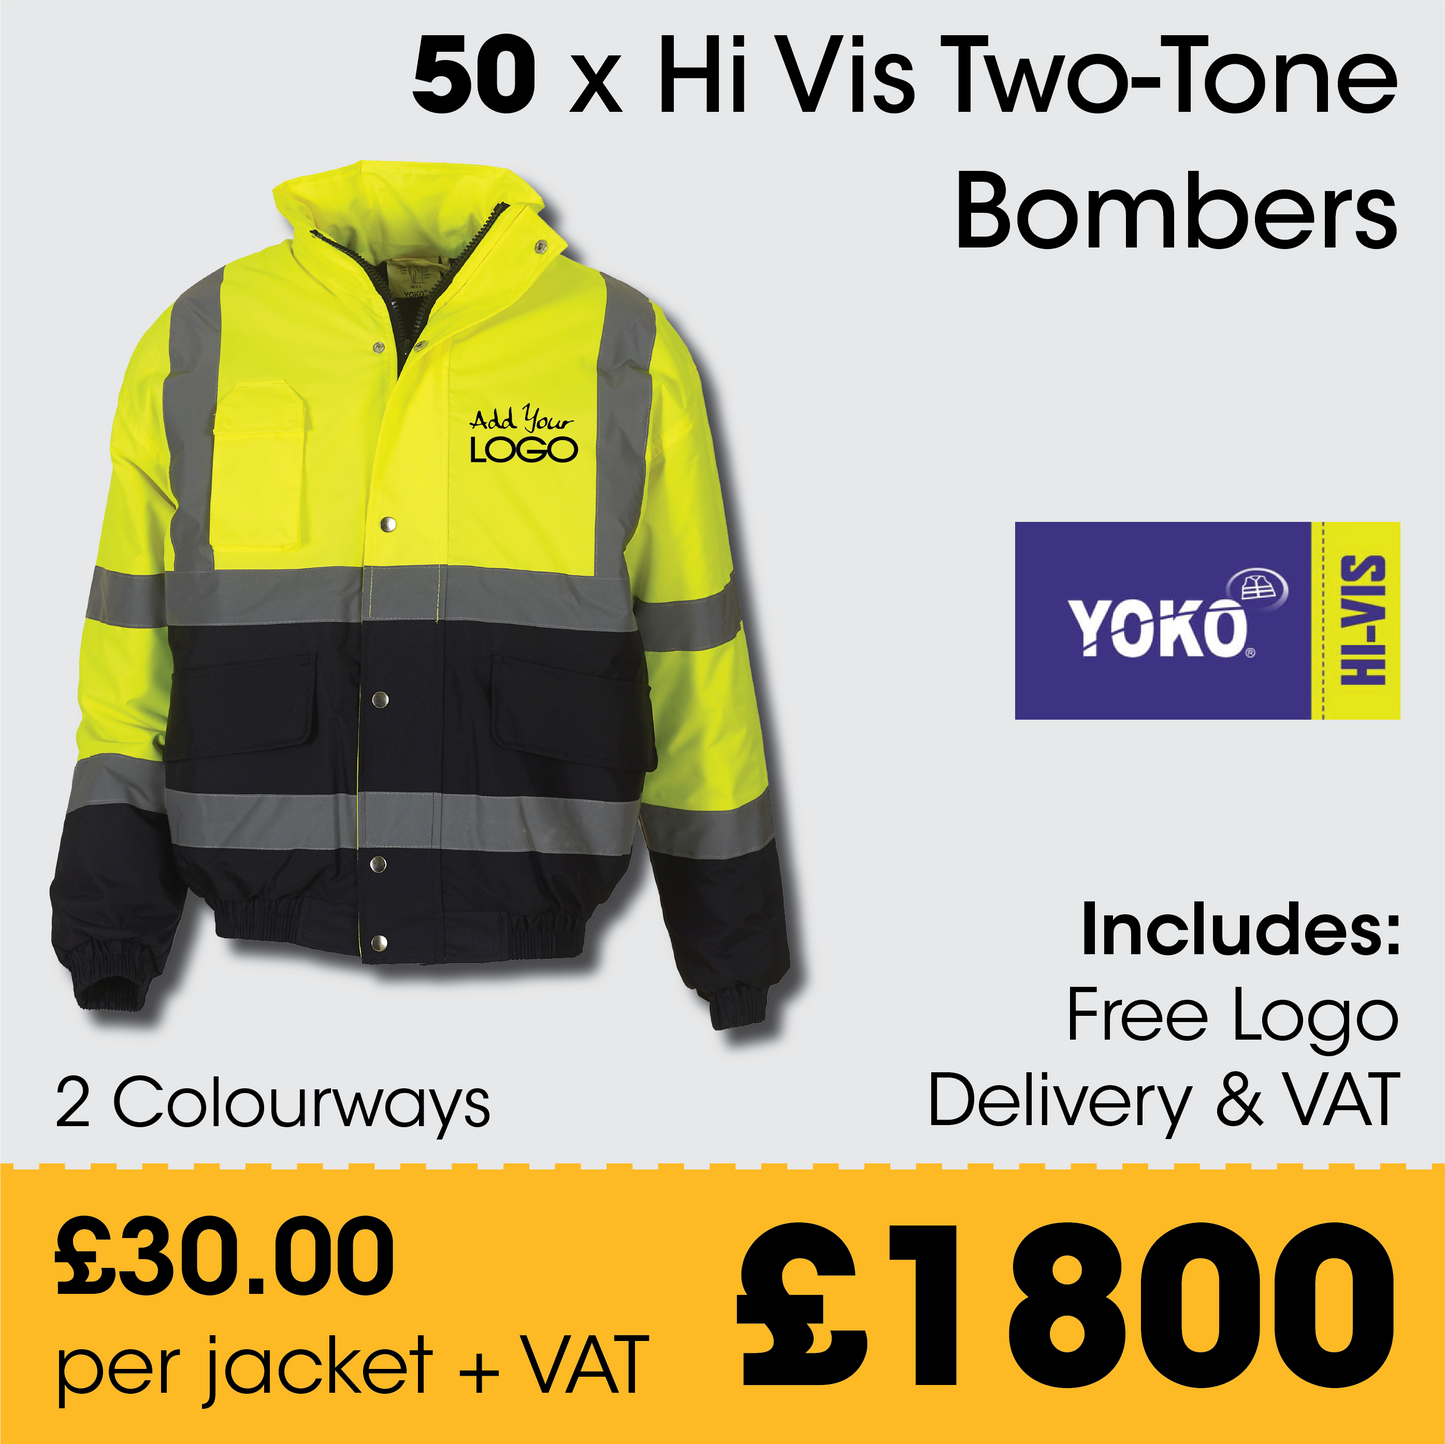 50 x YOKO Deluxe 2 Tone Bomber Jacket + FREE Print & Delivery